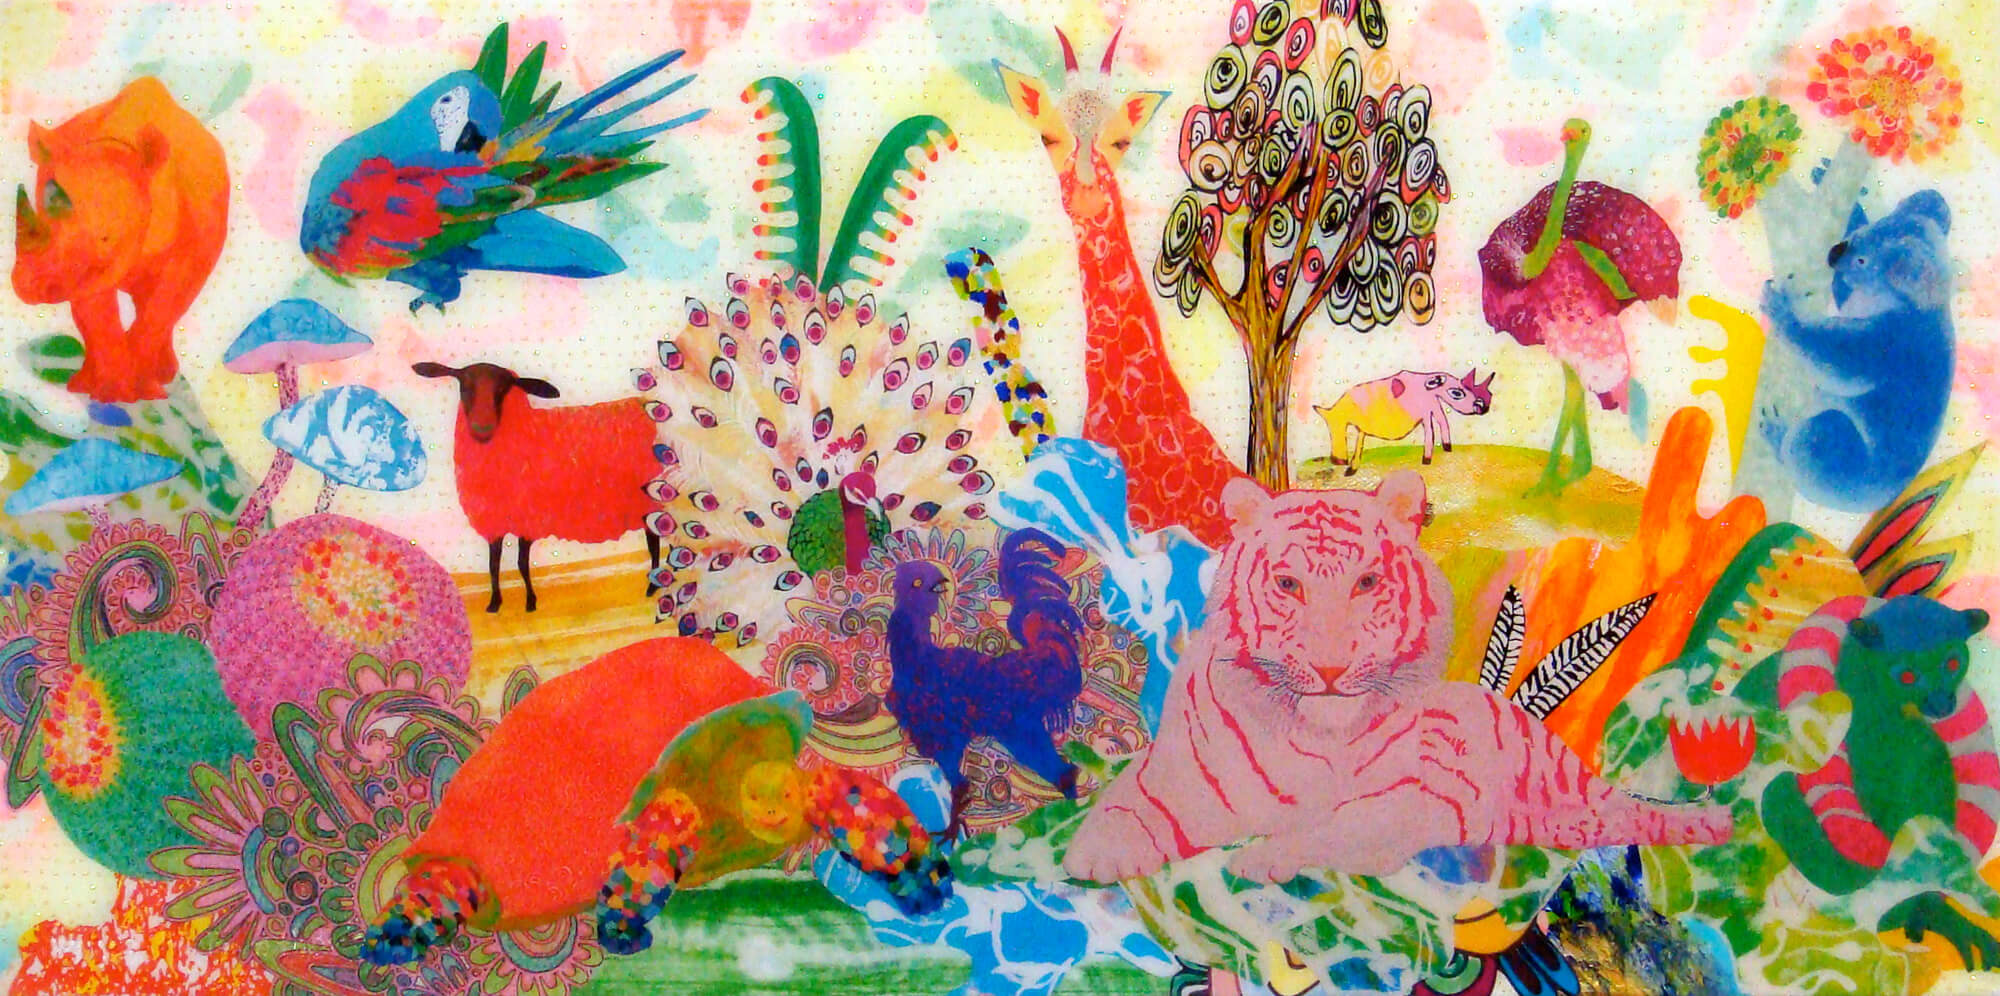 Animal wonderland 21改行
Acrylic glitter paper and ink on canvas, 300×600mm, 2011